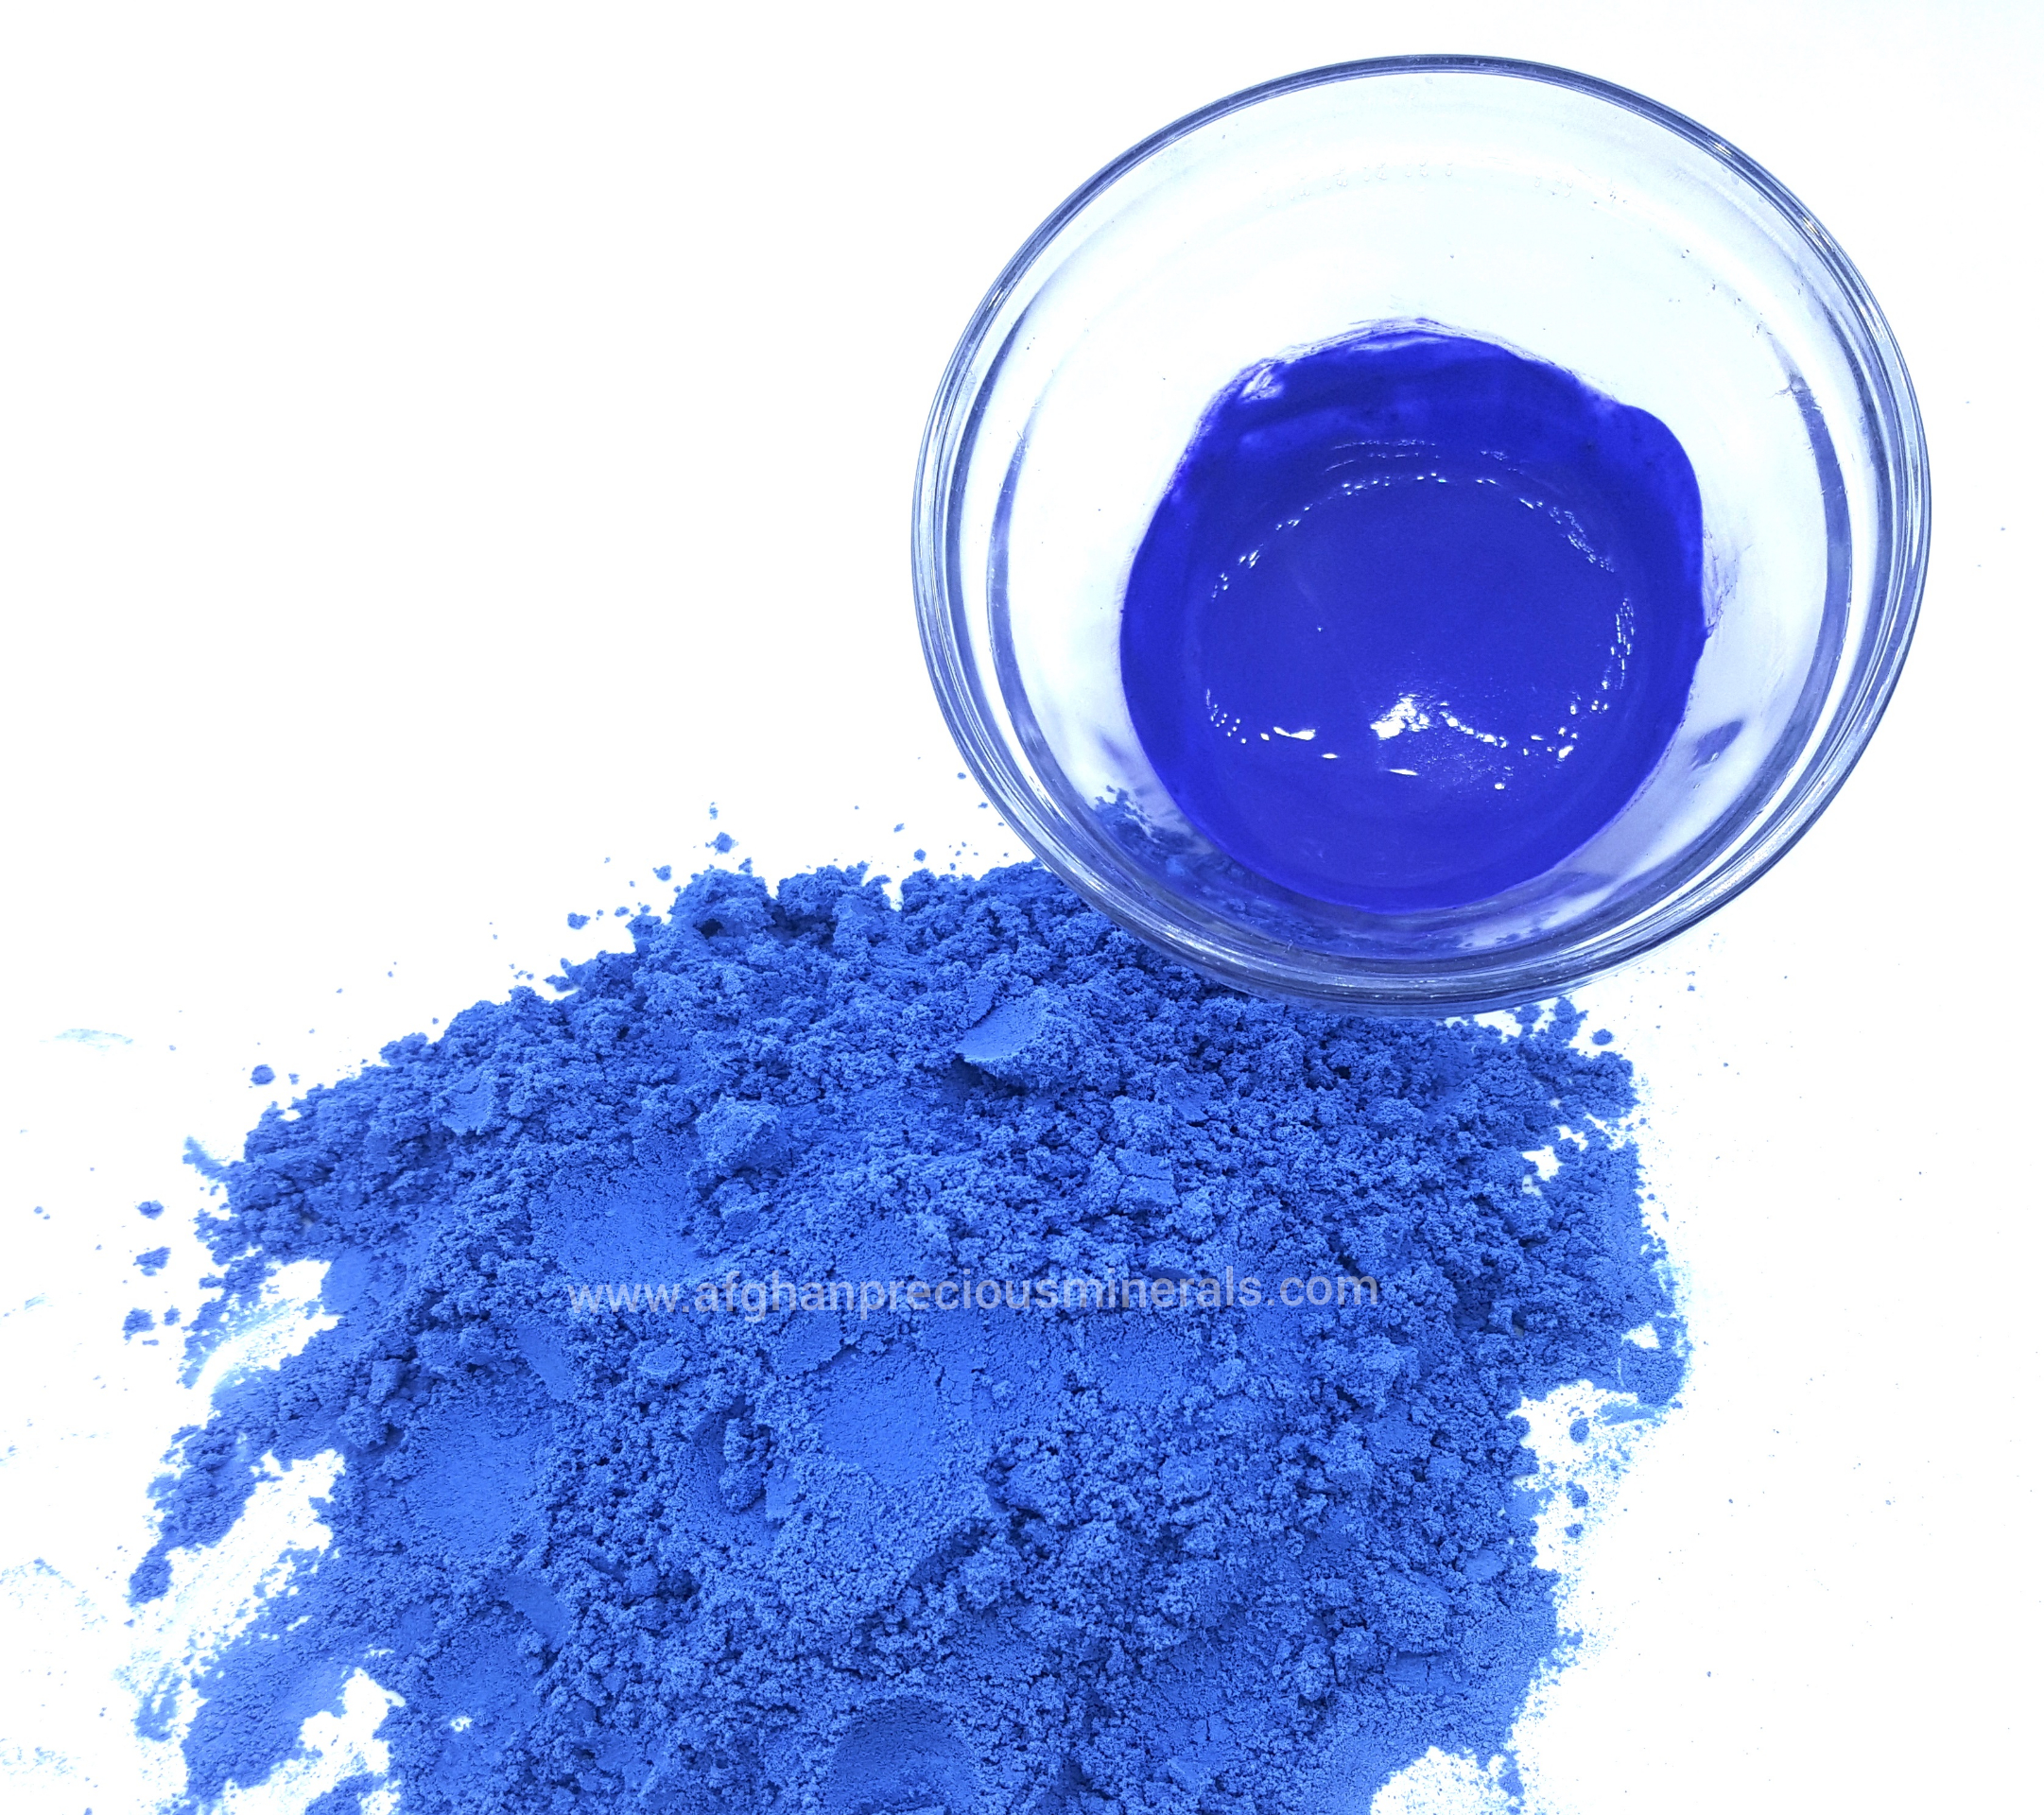 10ct Natural Top Blue Color Lapis Lazuli Cab ~100% Natural Untreated~